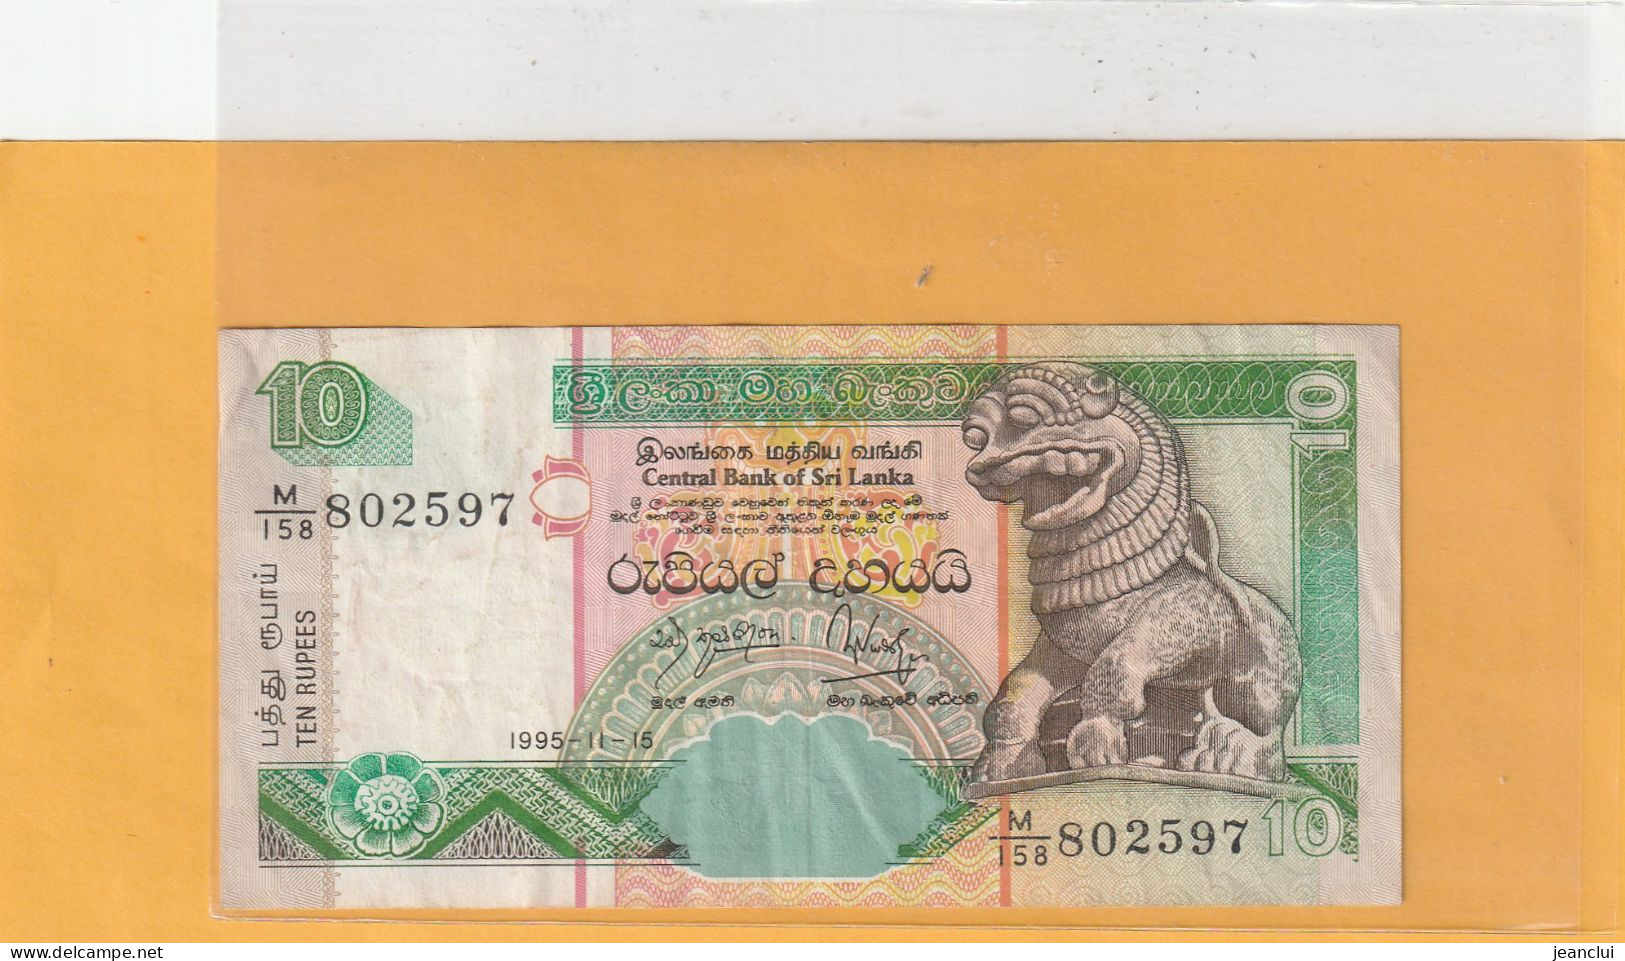 CENTRAL BANK OF SRI LANKA   .  10 RUPEES  .  15-11-1995  .  N°   M/158 802597 .  2 SCANNES  .  BILLET USITE - Sri Lanka